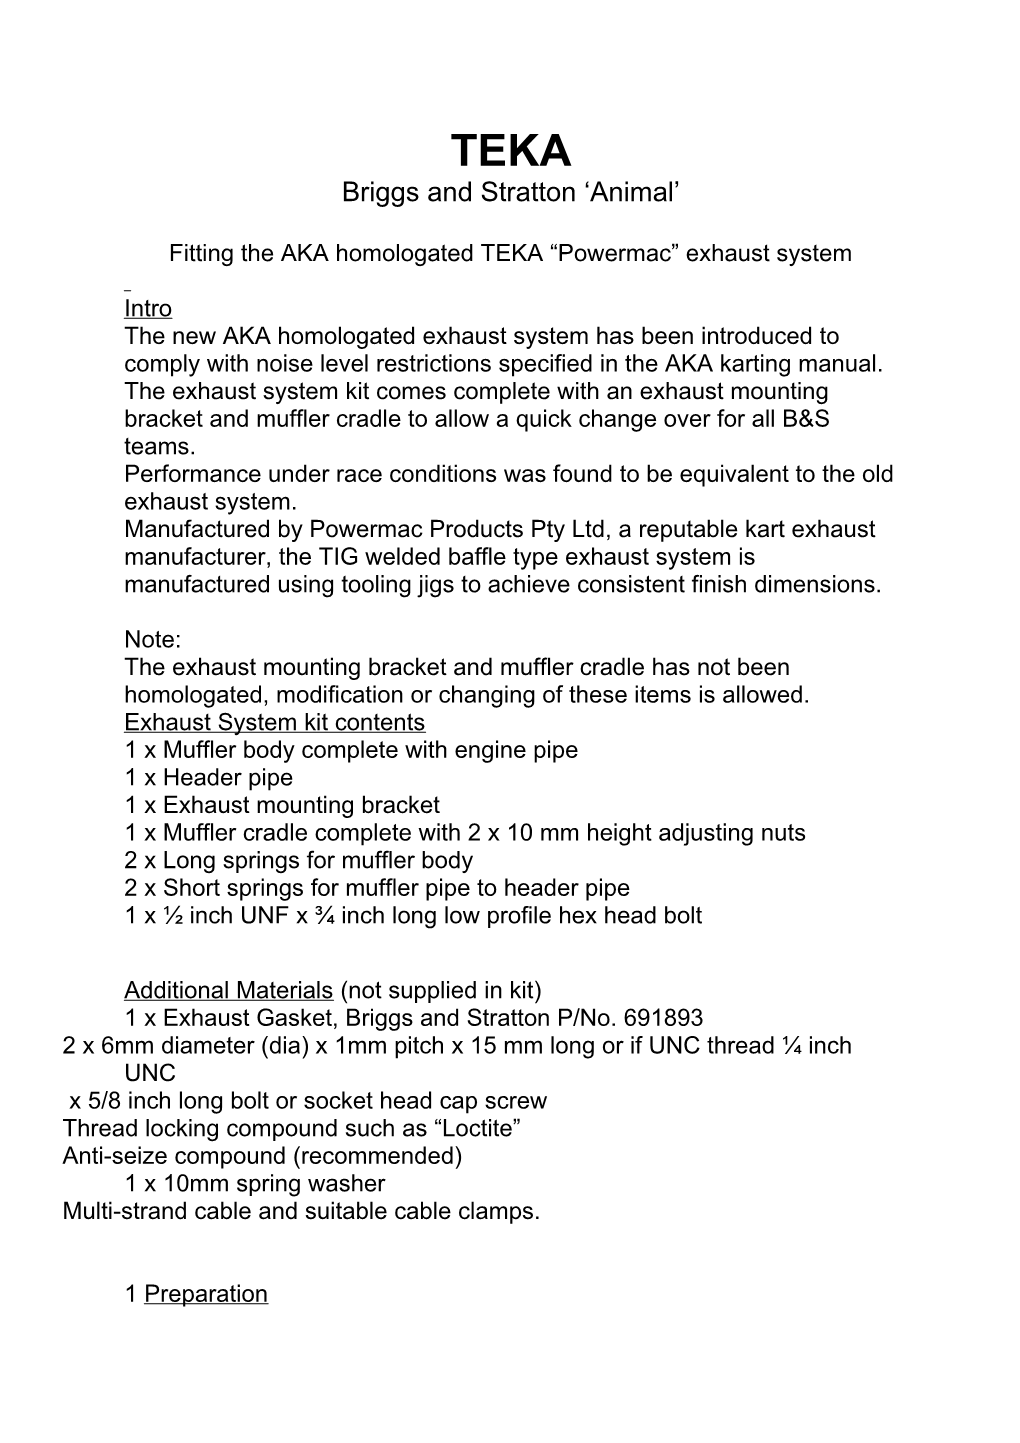 Fitting the AKA Homologated TEKA Powermac Exhaust System